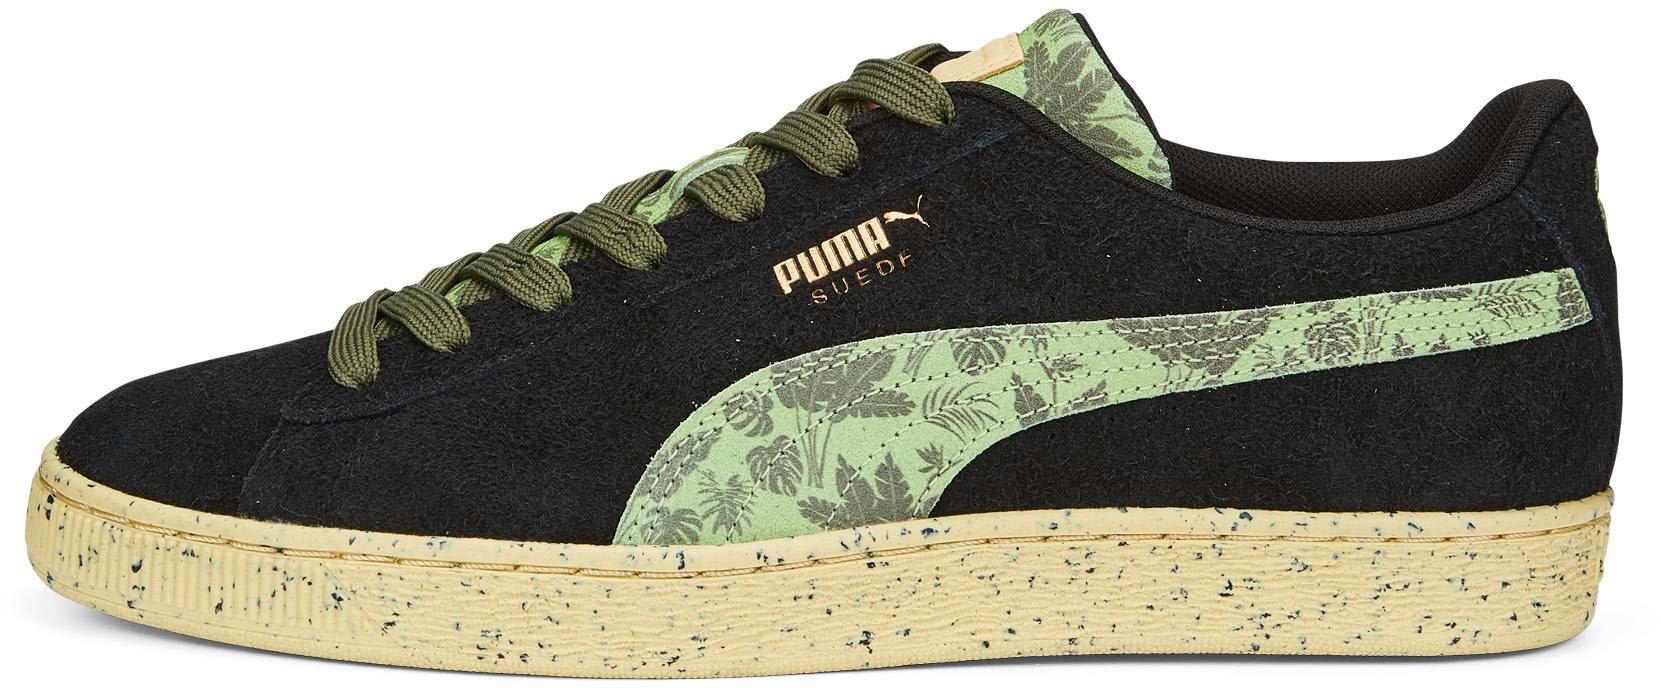 Puma Suede Gentle Jungle 40,5